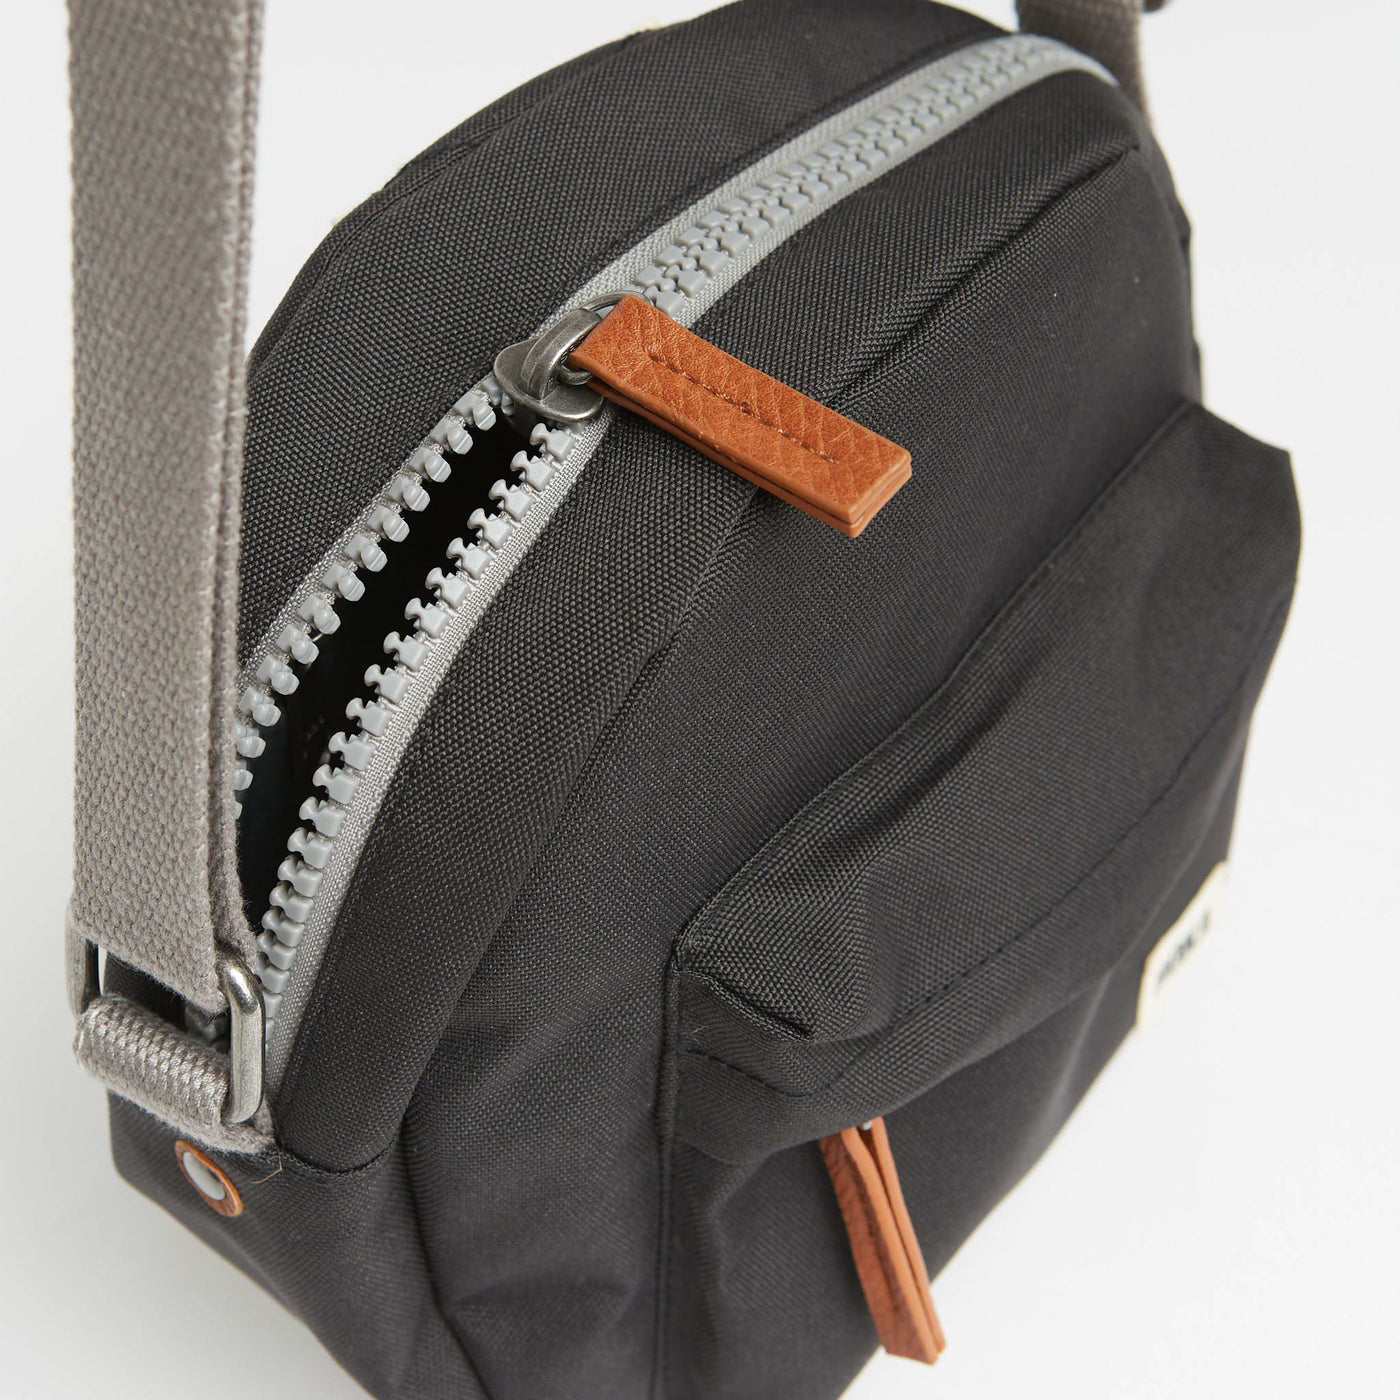 Roka | Sustainable Bag | Crossbody Bag | Black